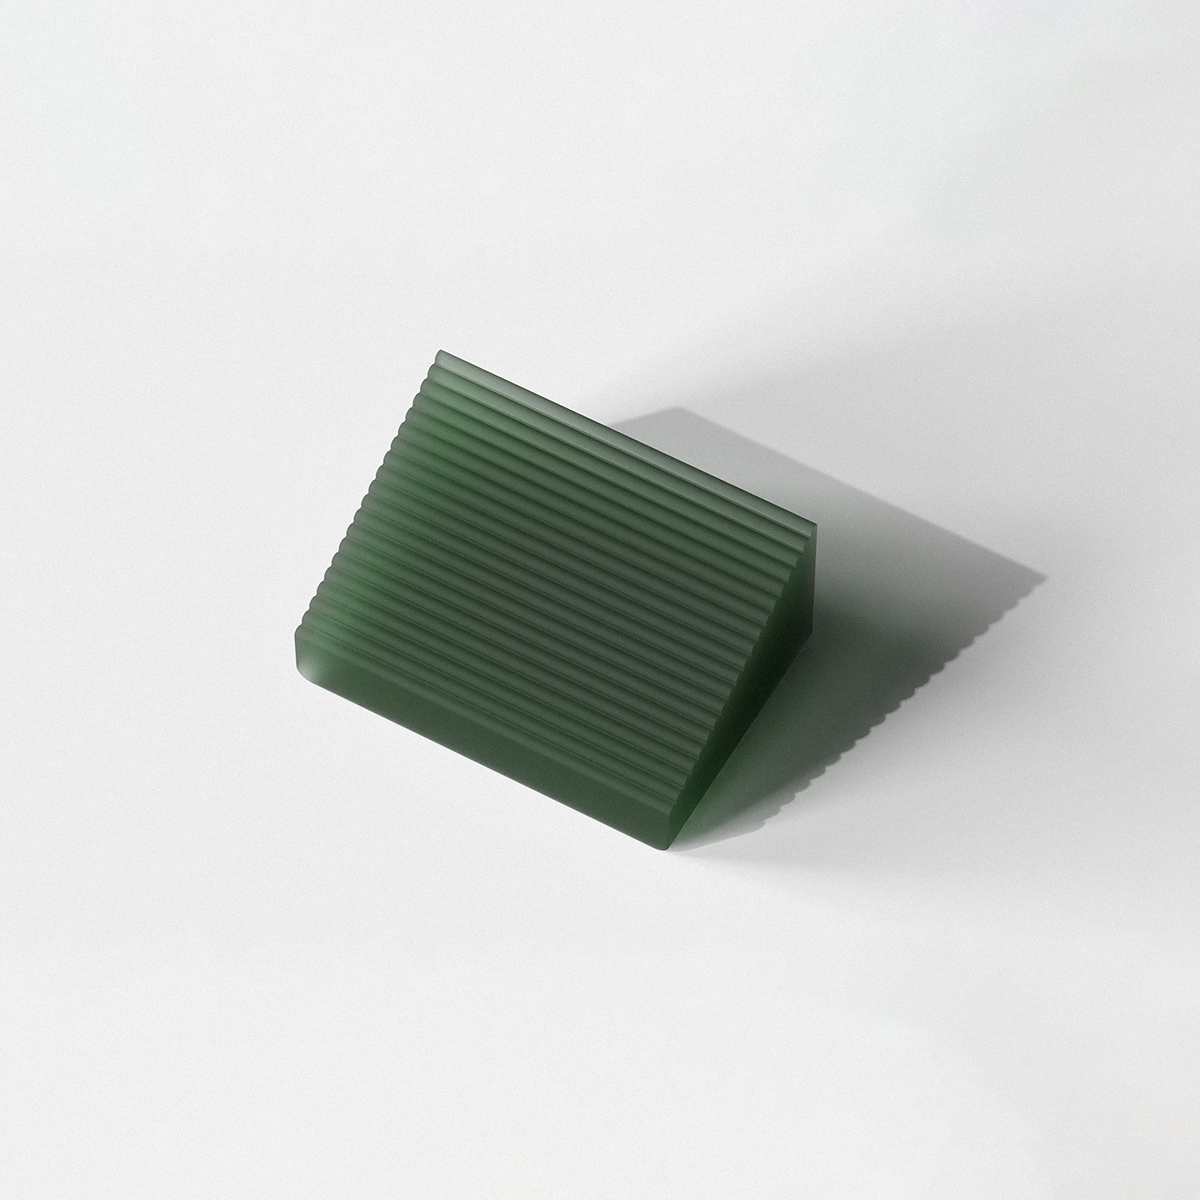 cmf Design Exploration industrial design  laptop stand Marble objects Render translucent visualization